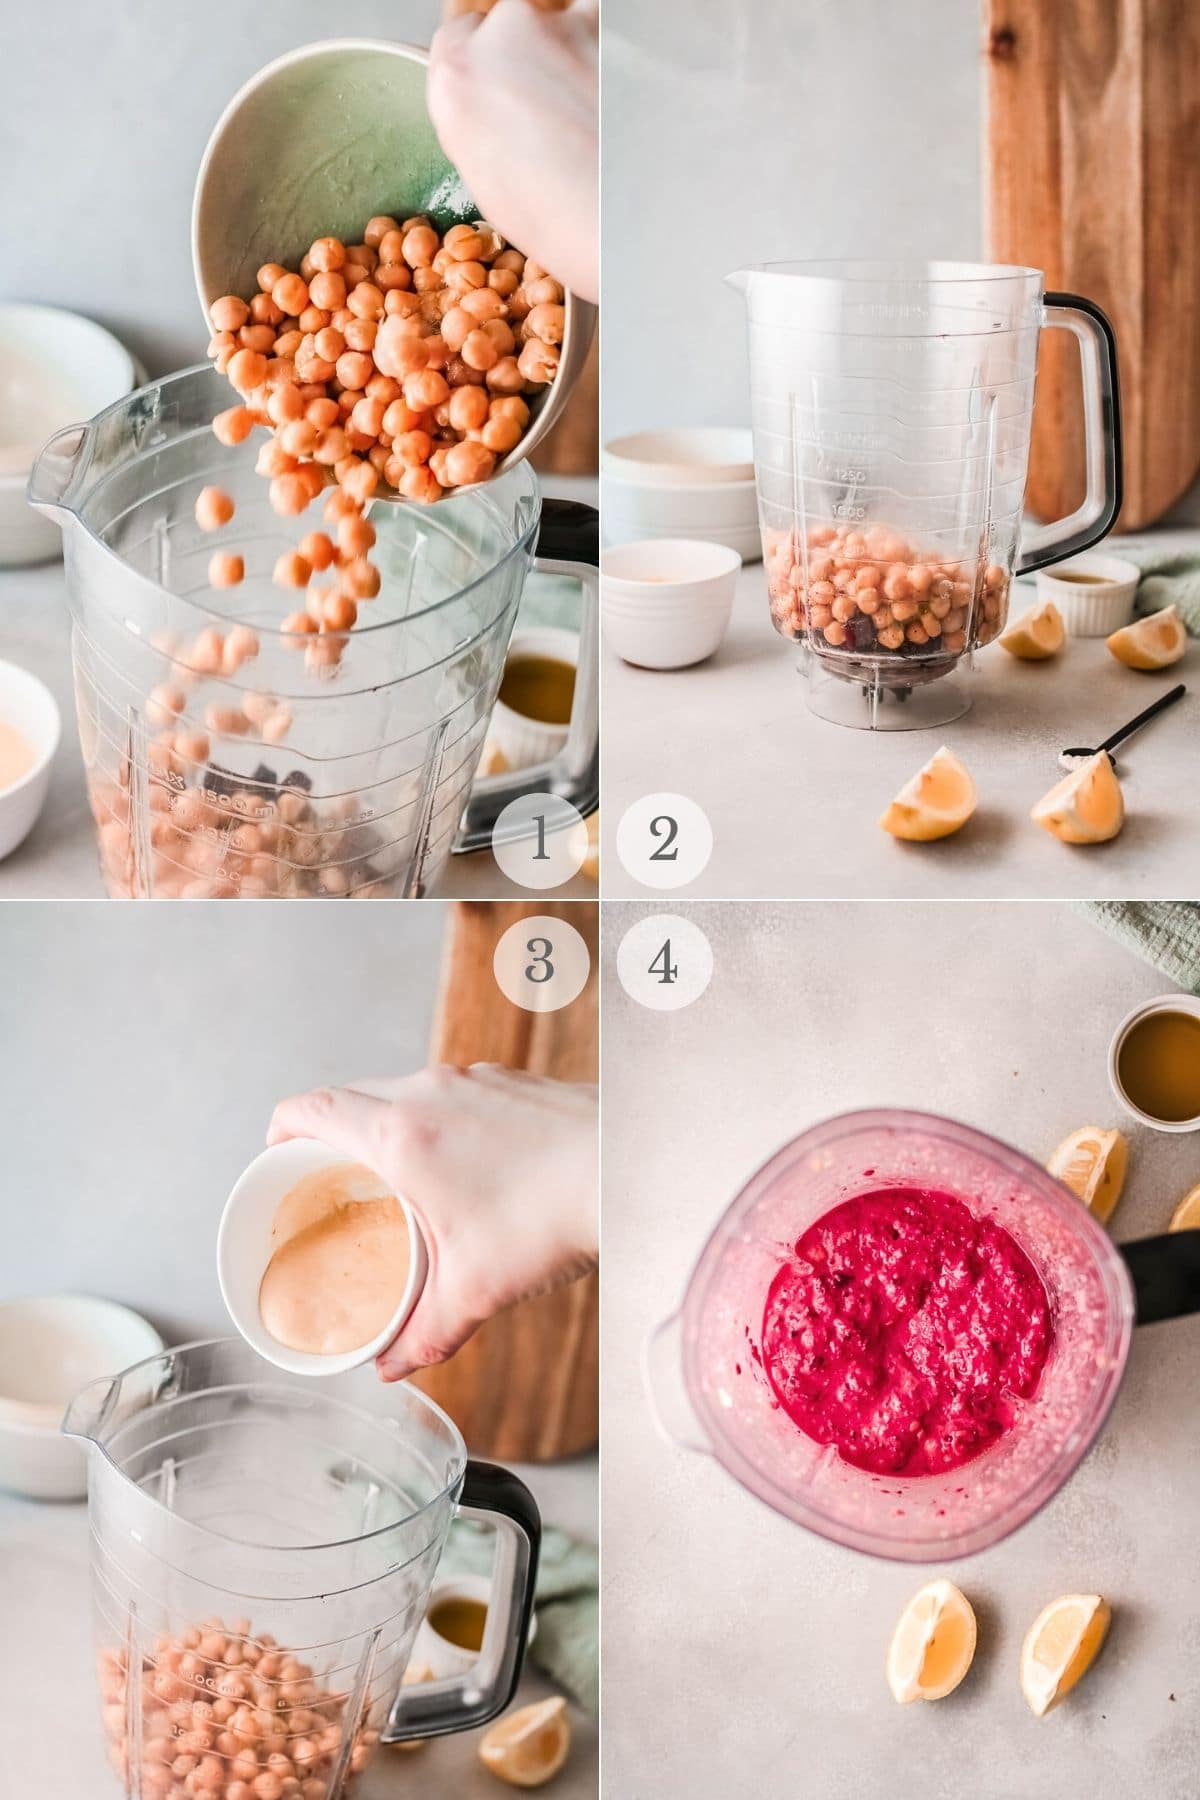 beet hummus recipe steps 1-4a